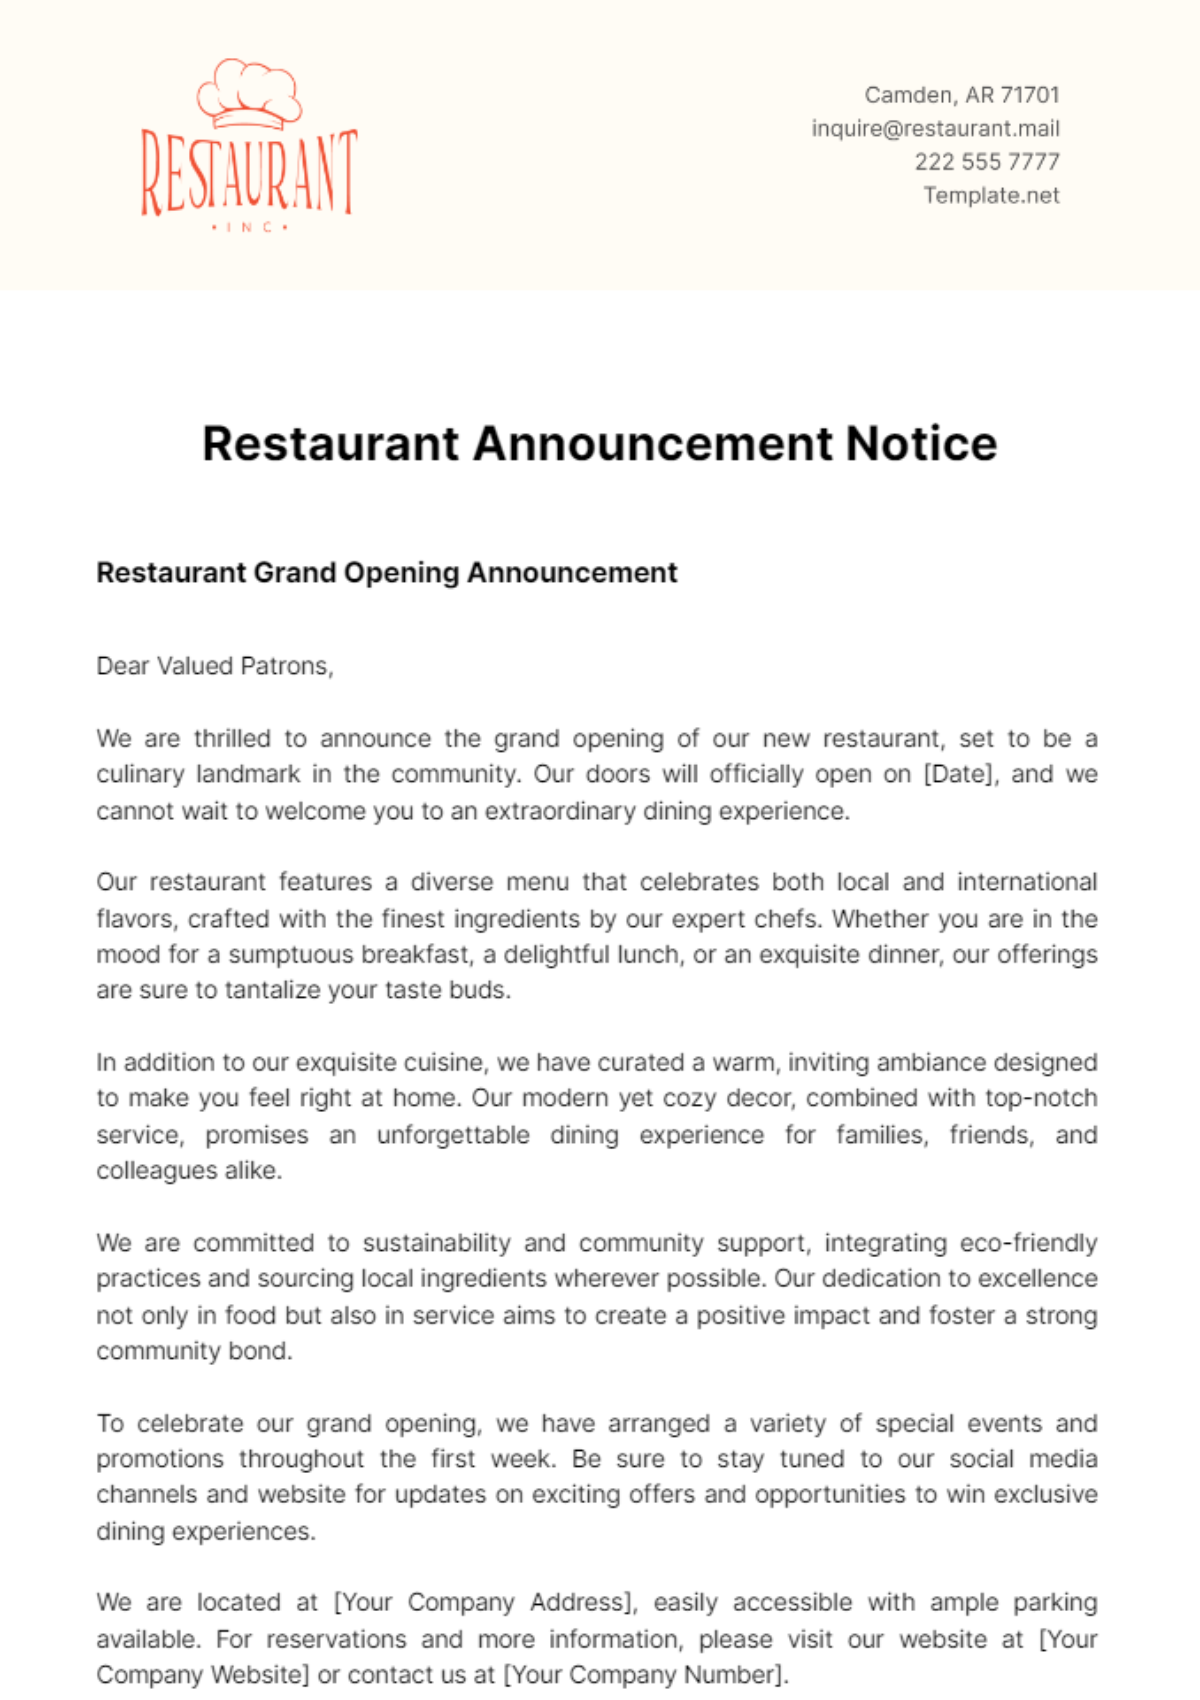 Free Restaurant Announcement Notice Template